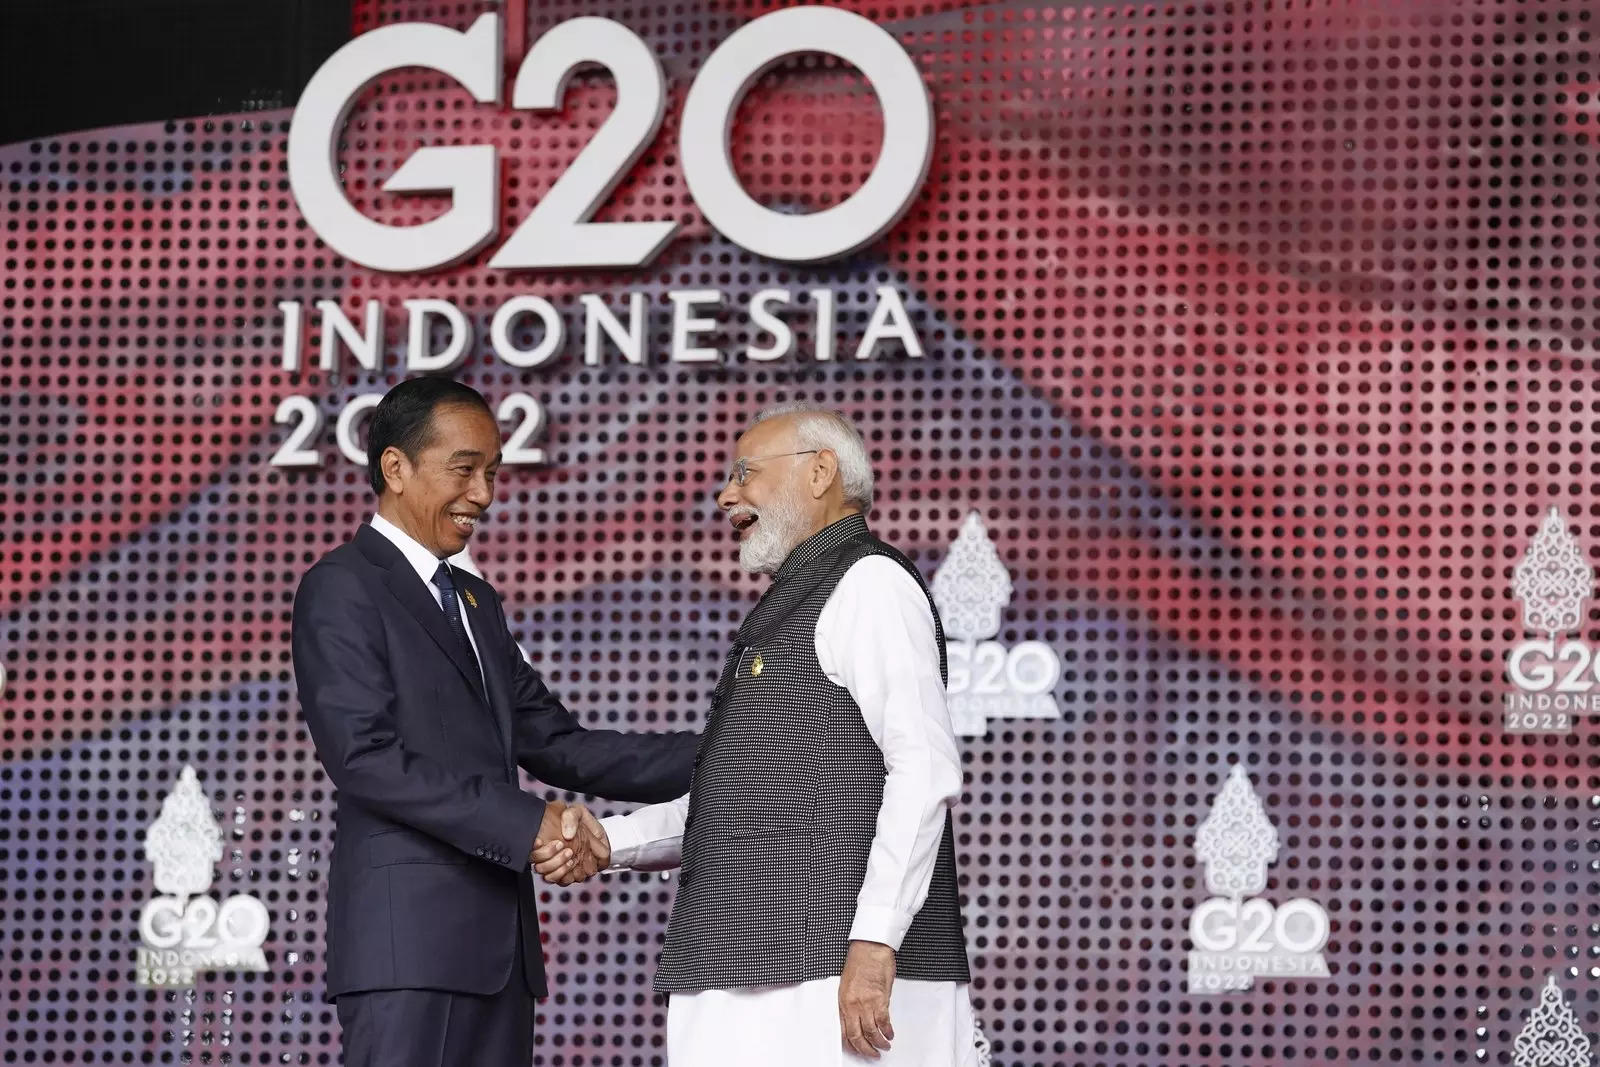 PM Modi meets world leaders at G20 Summit